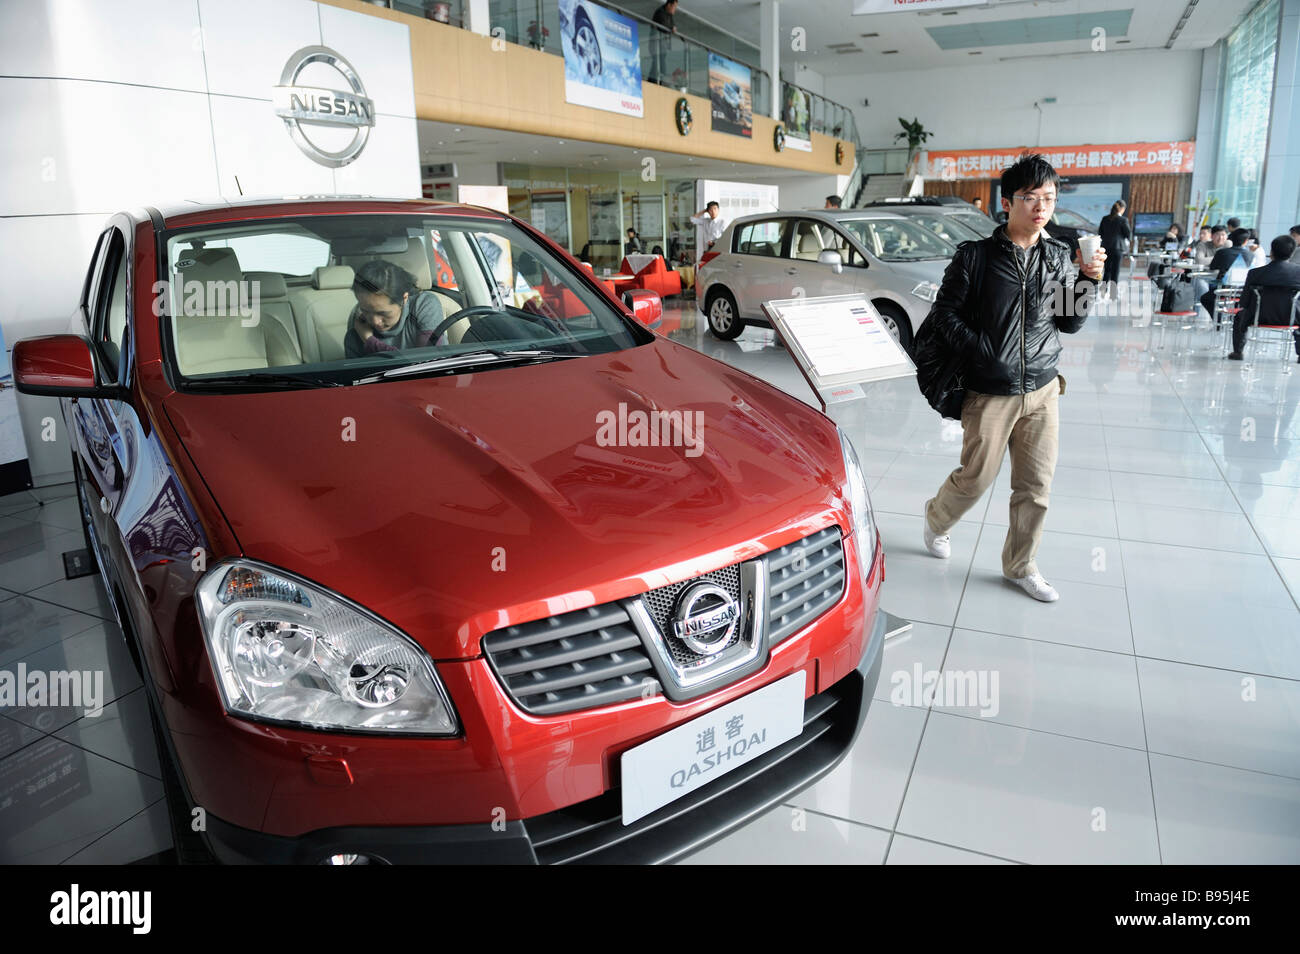 A Nissan motor dealership in Beijing, China. 16-Mar-2009 Stock Photo